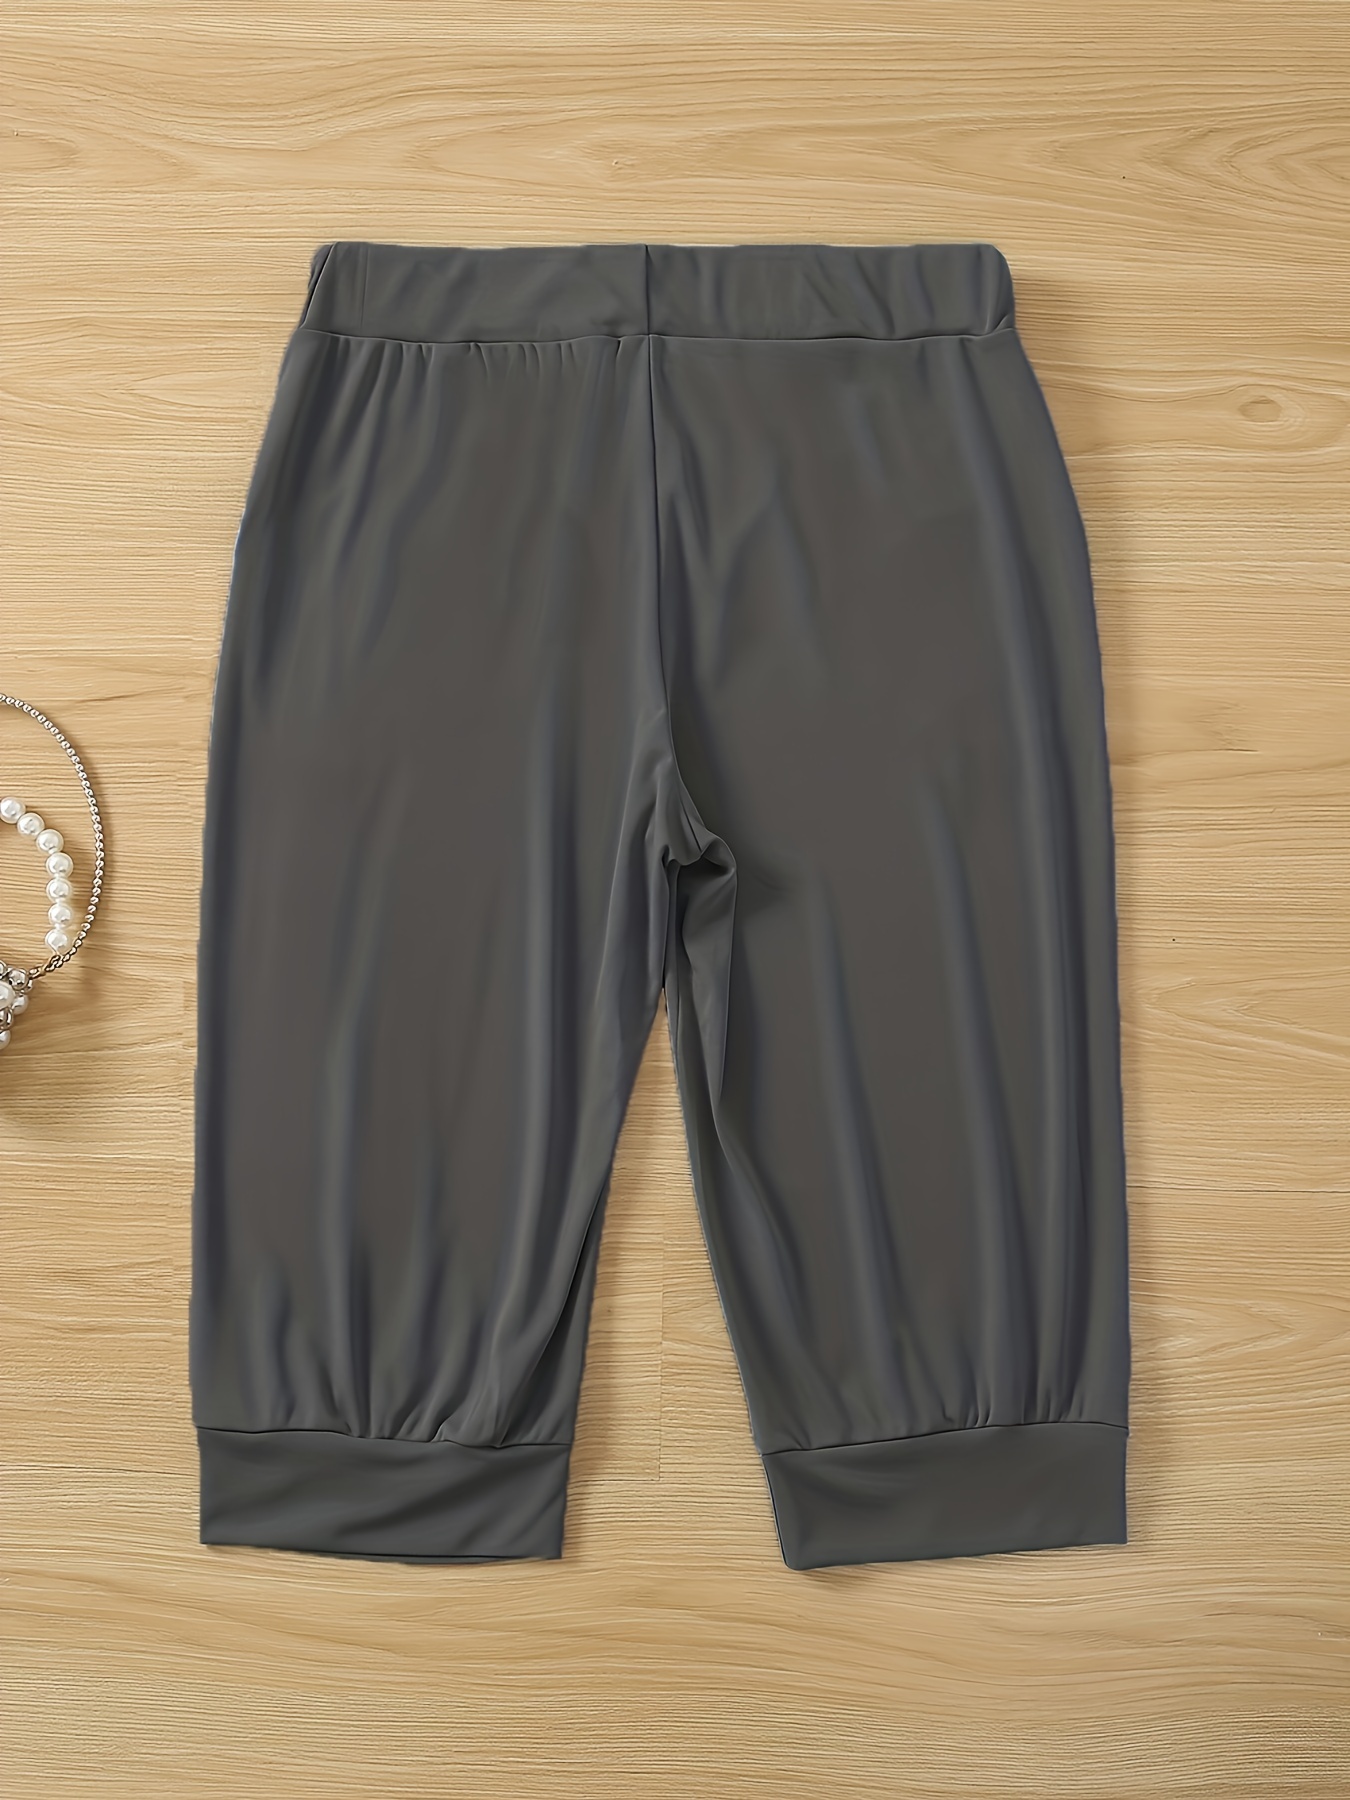 Womens Capri Lounge Pants Elastic High Waisted Drawstring Slacks Capris  Summer Casual Solid Color 3/4 Pants (Medium, Navy) 